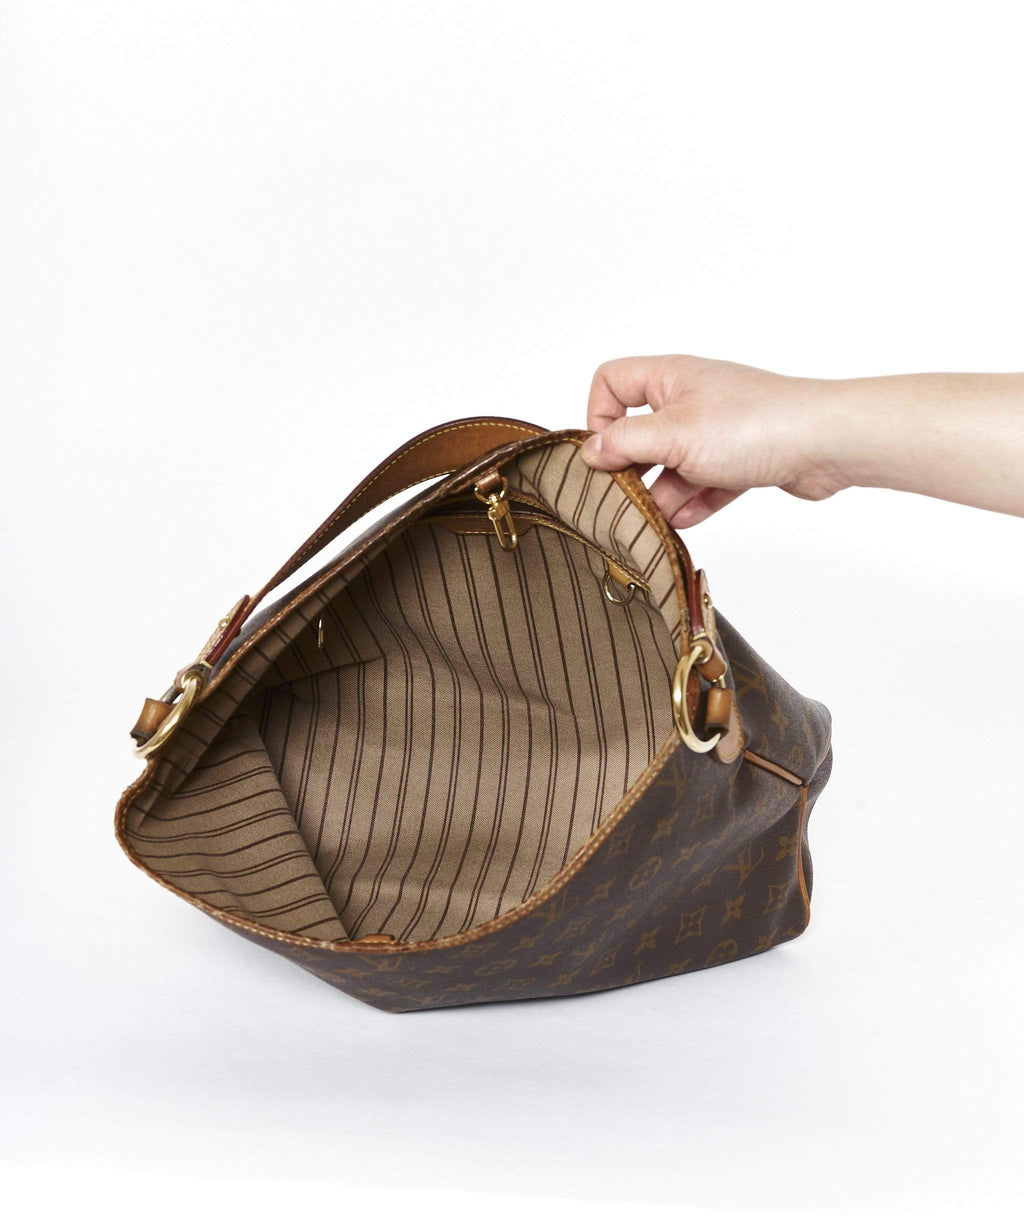 Louis Vuitton Brown Monogram Canvas MM Delightful Shoulder Bag